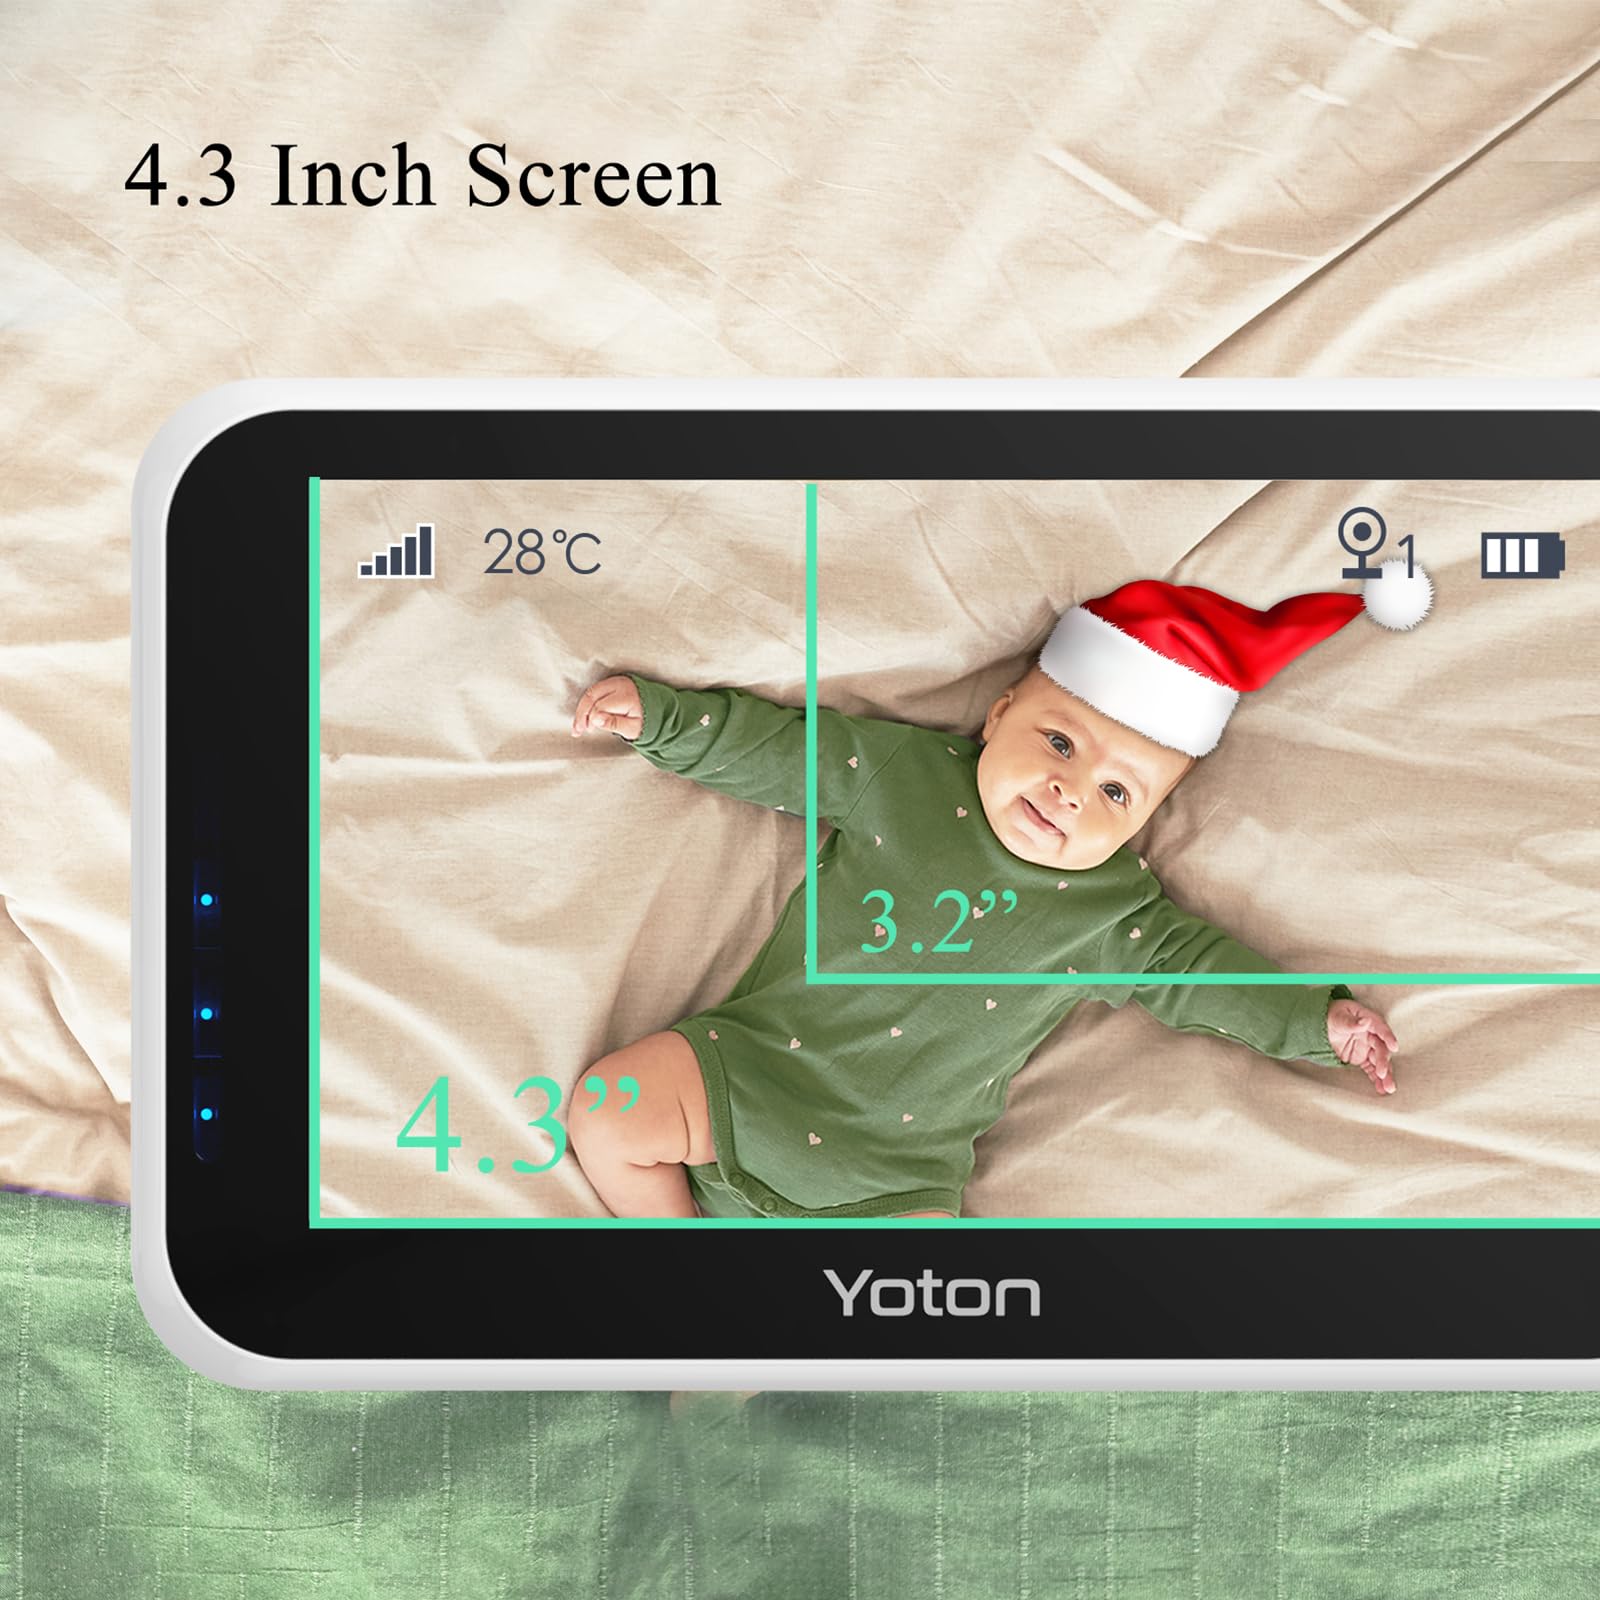 YOTON YB06 Baby Monitor, 4.3 ich screen